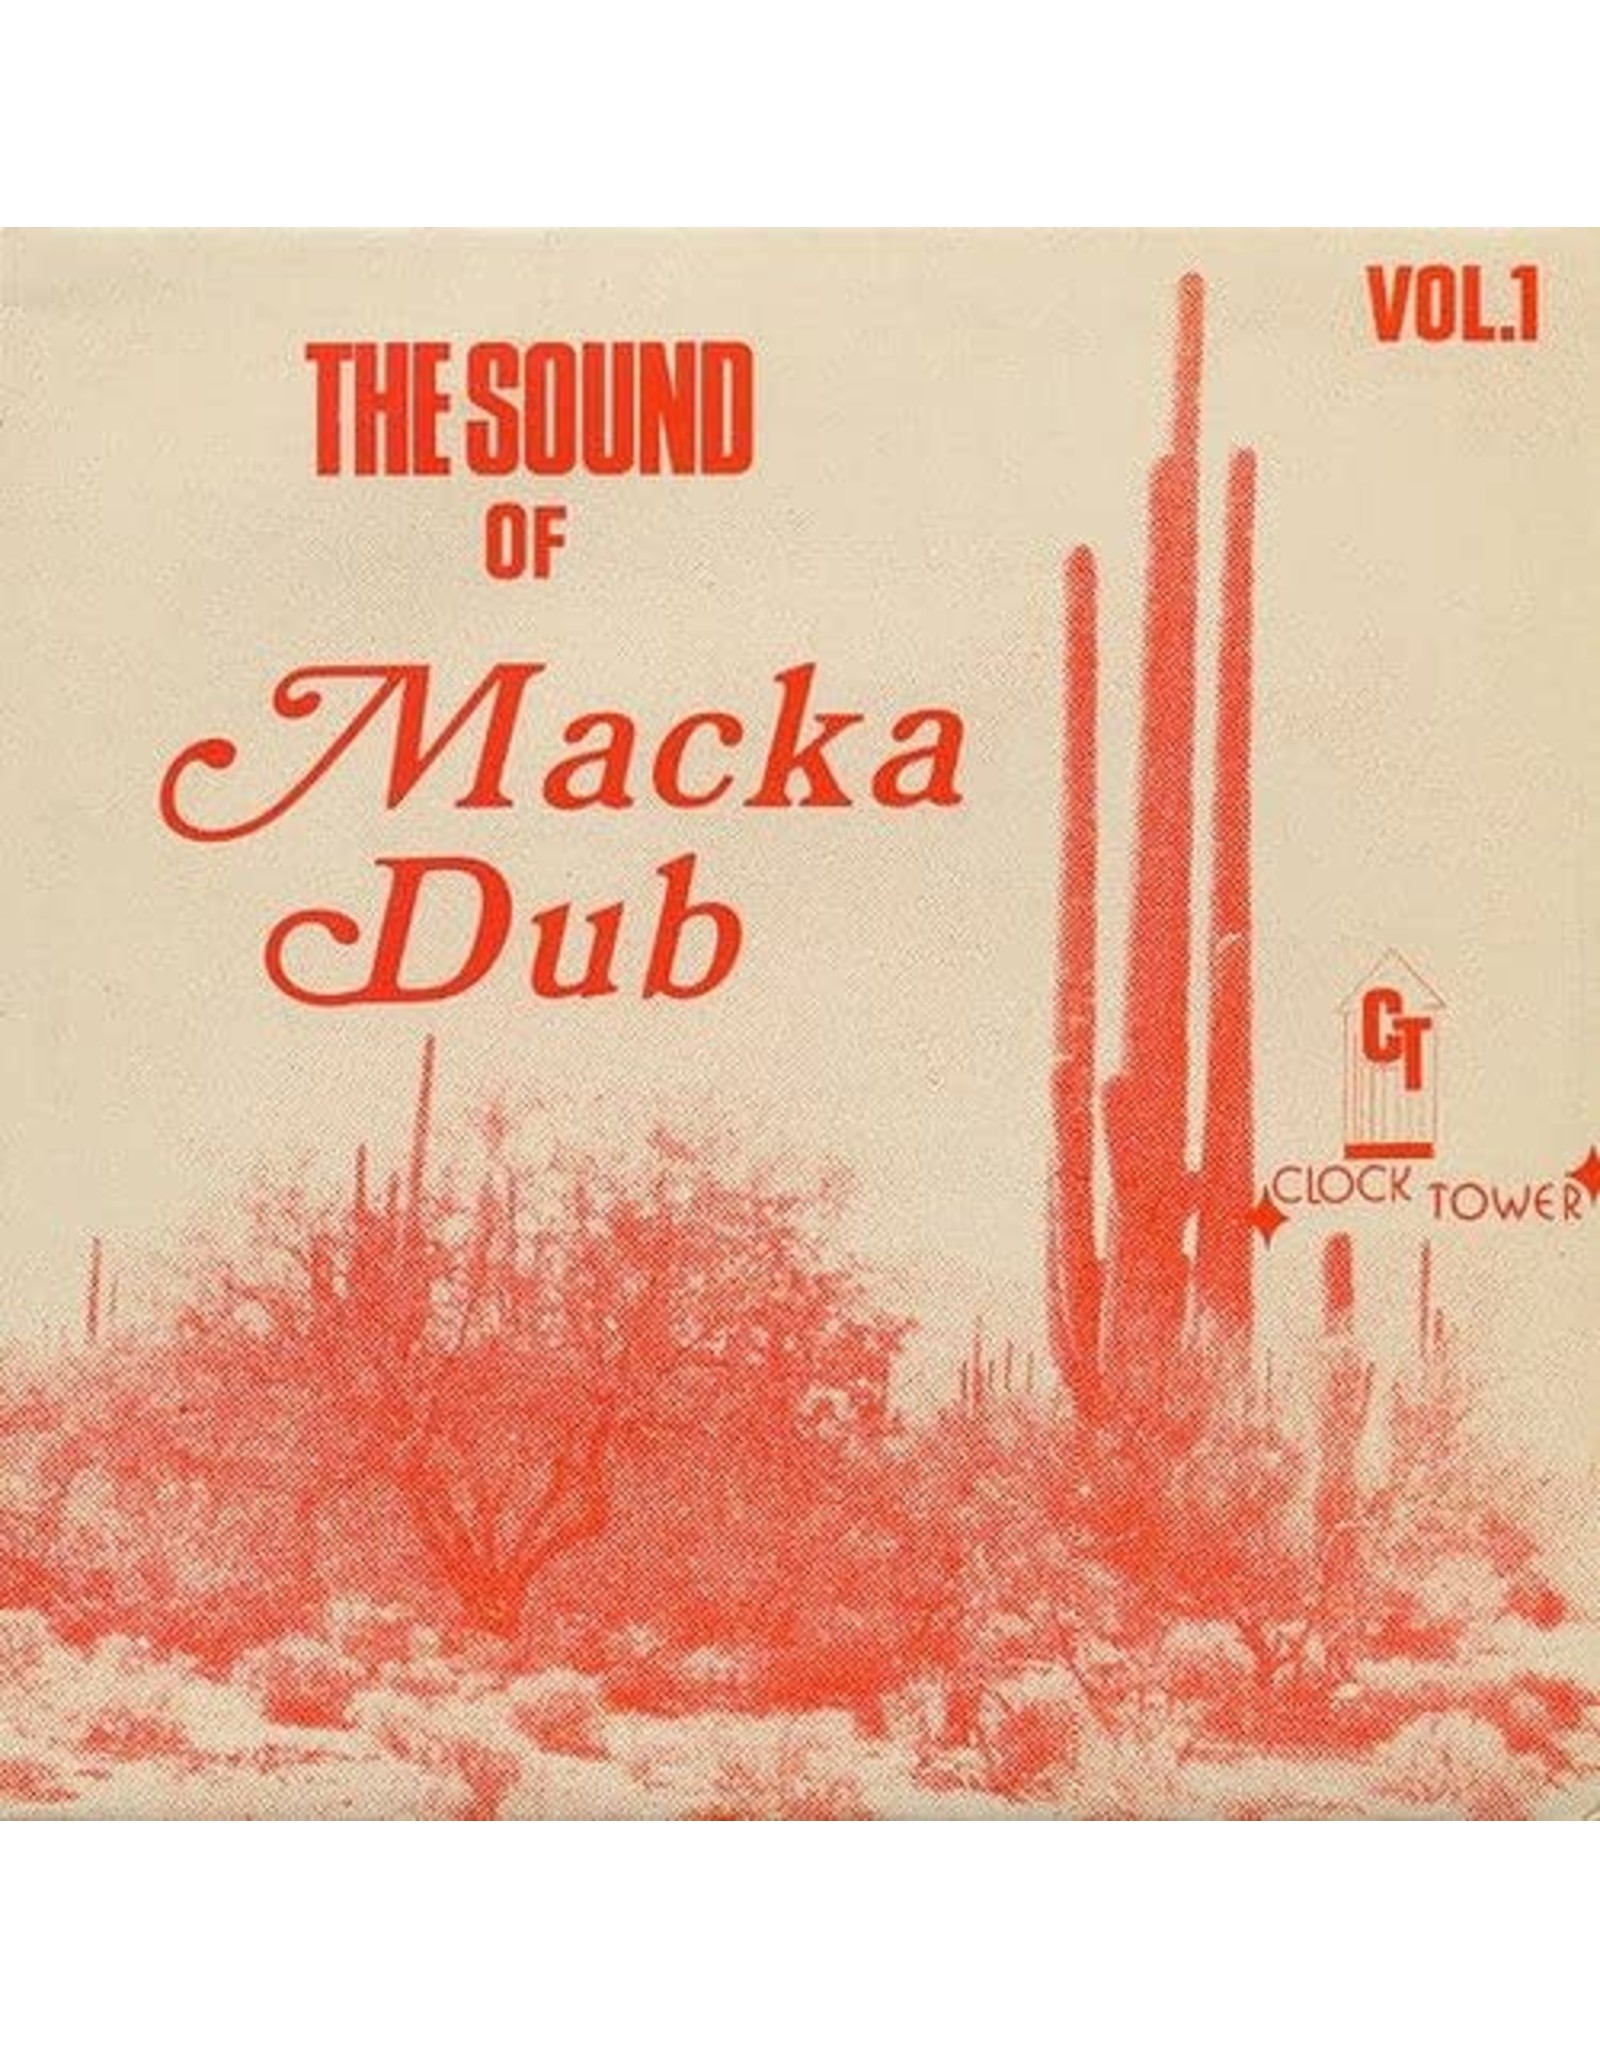 Macka Dub - The Sound Of VOL.1  LP